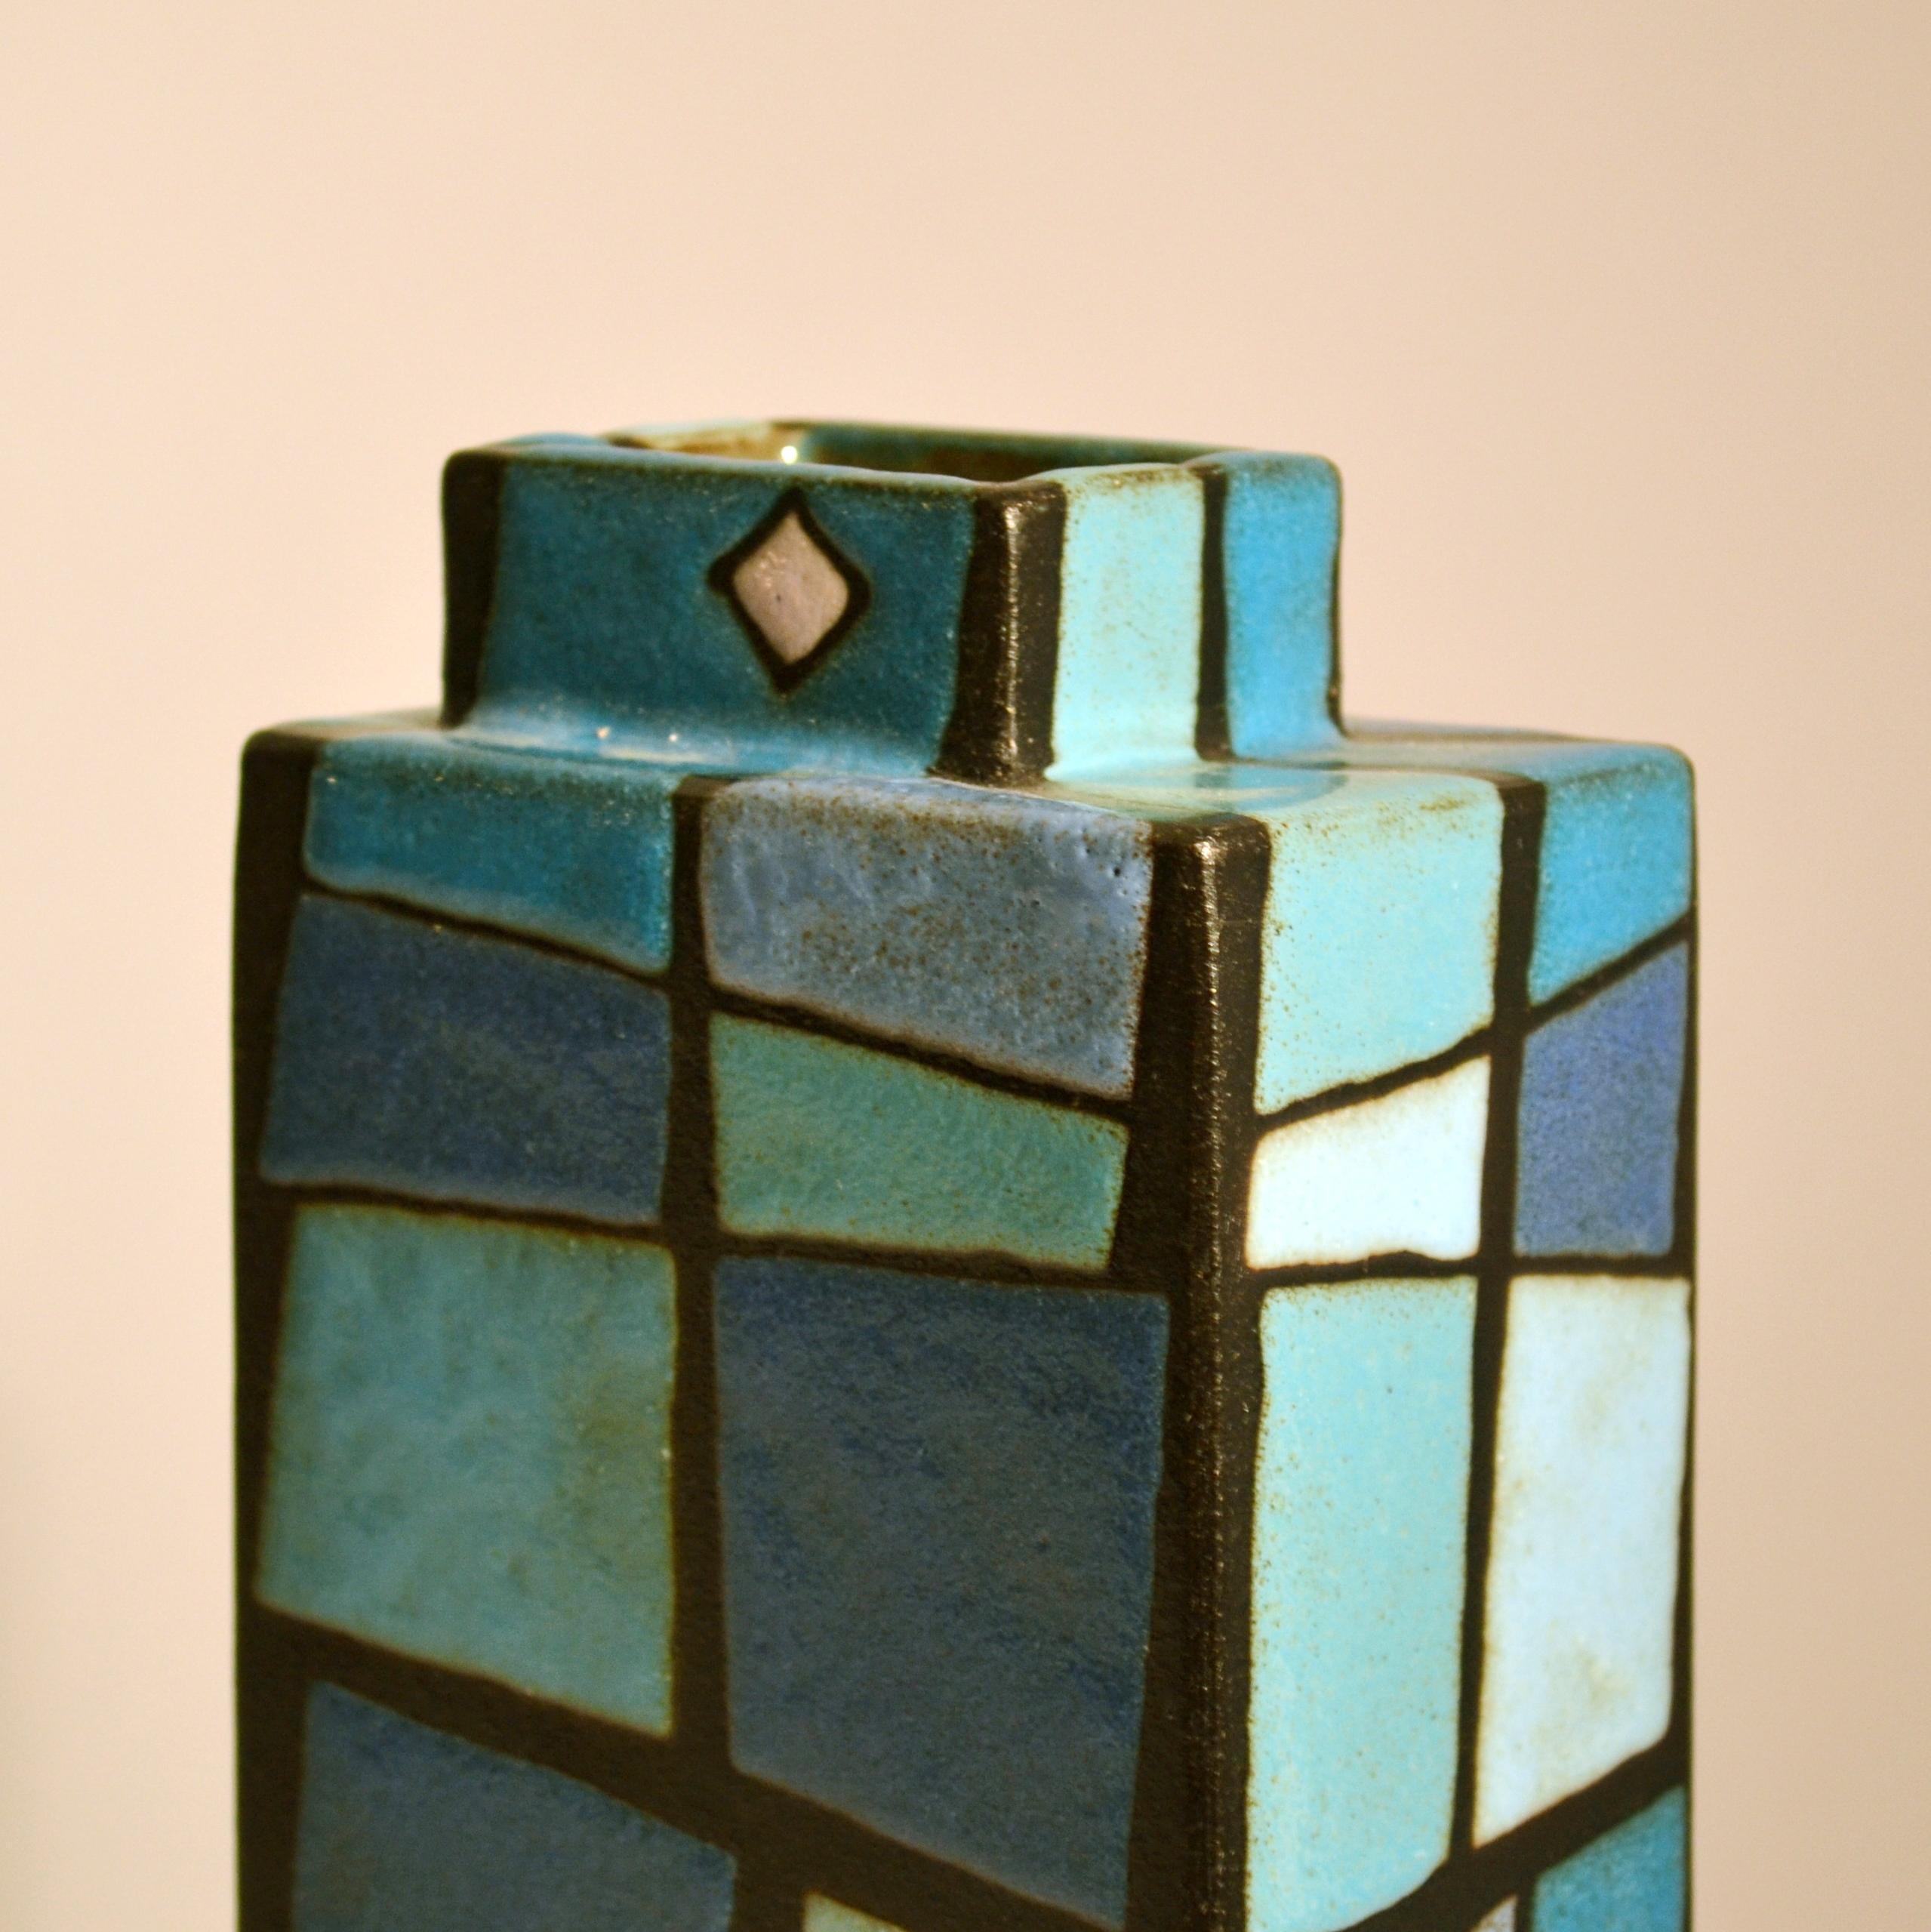 Rechteckige Studio Pottery-Vase, rechteckig, dekoriert in blauen und grünen Quadraten (Handgefertigt)